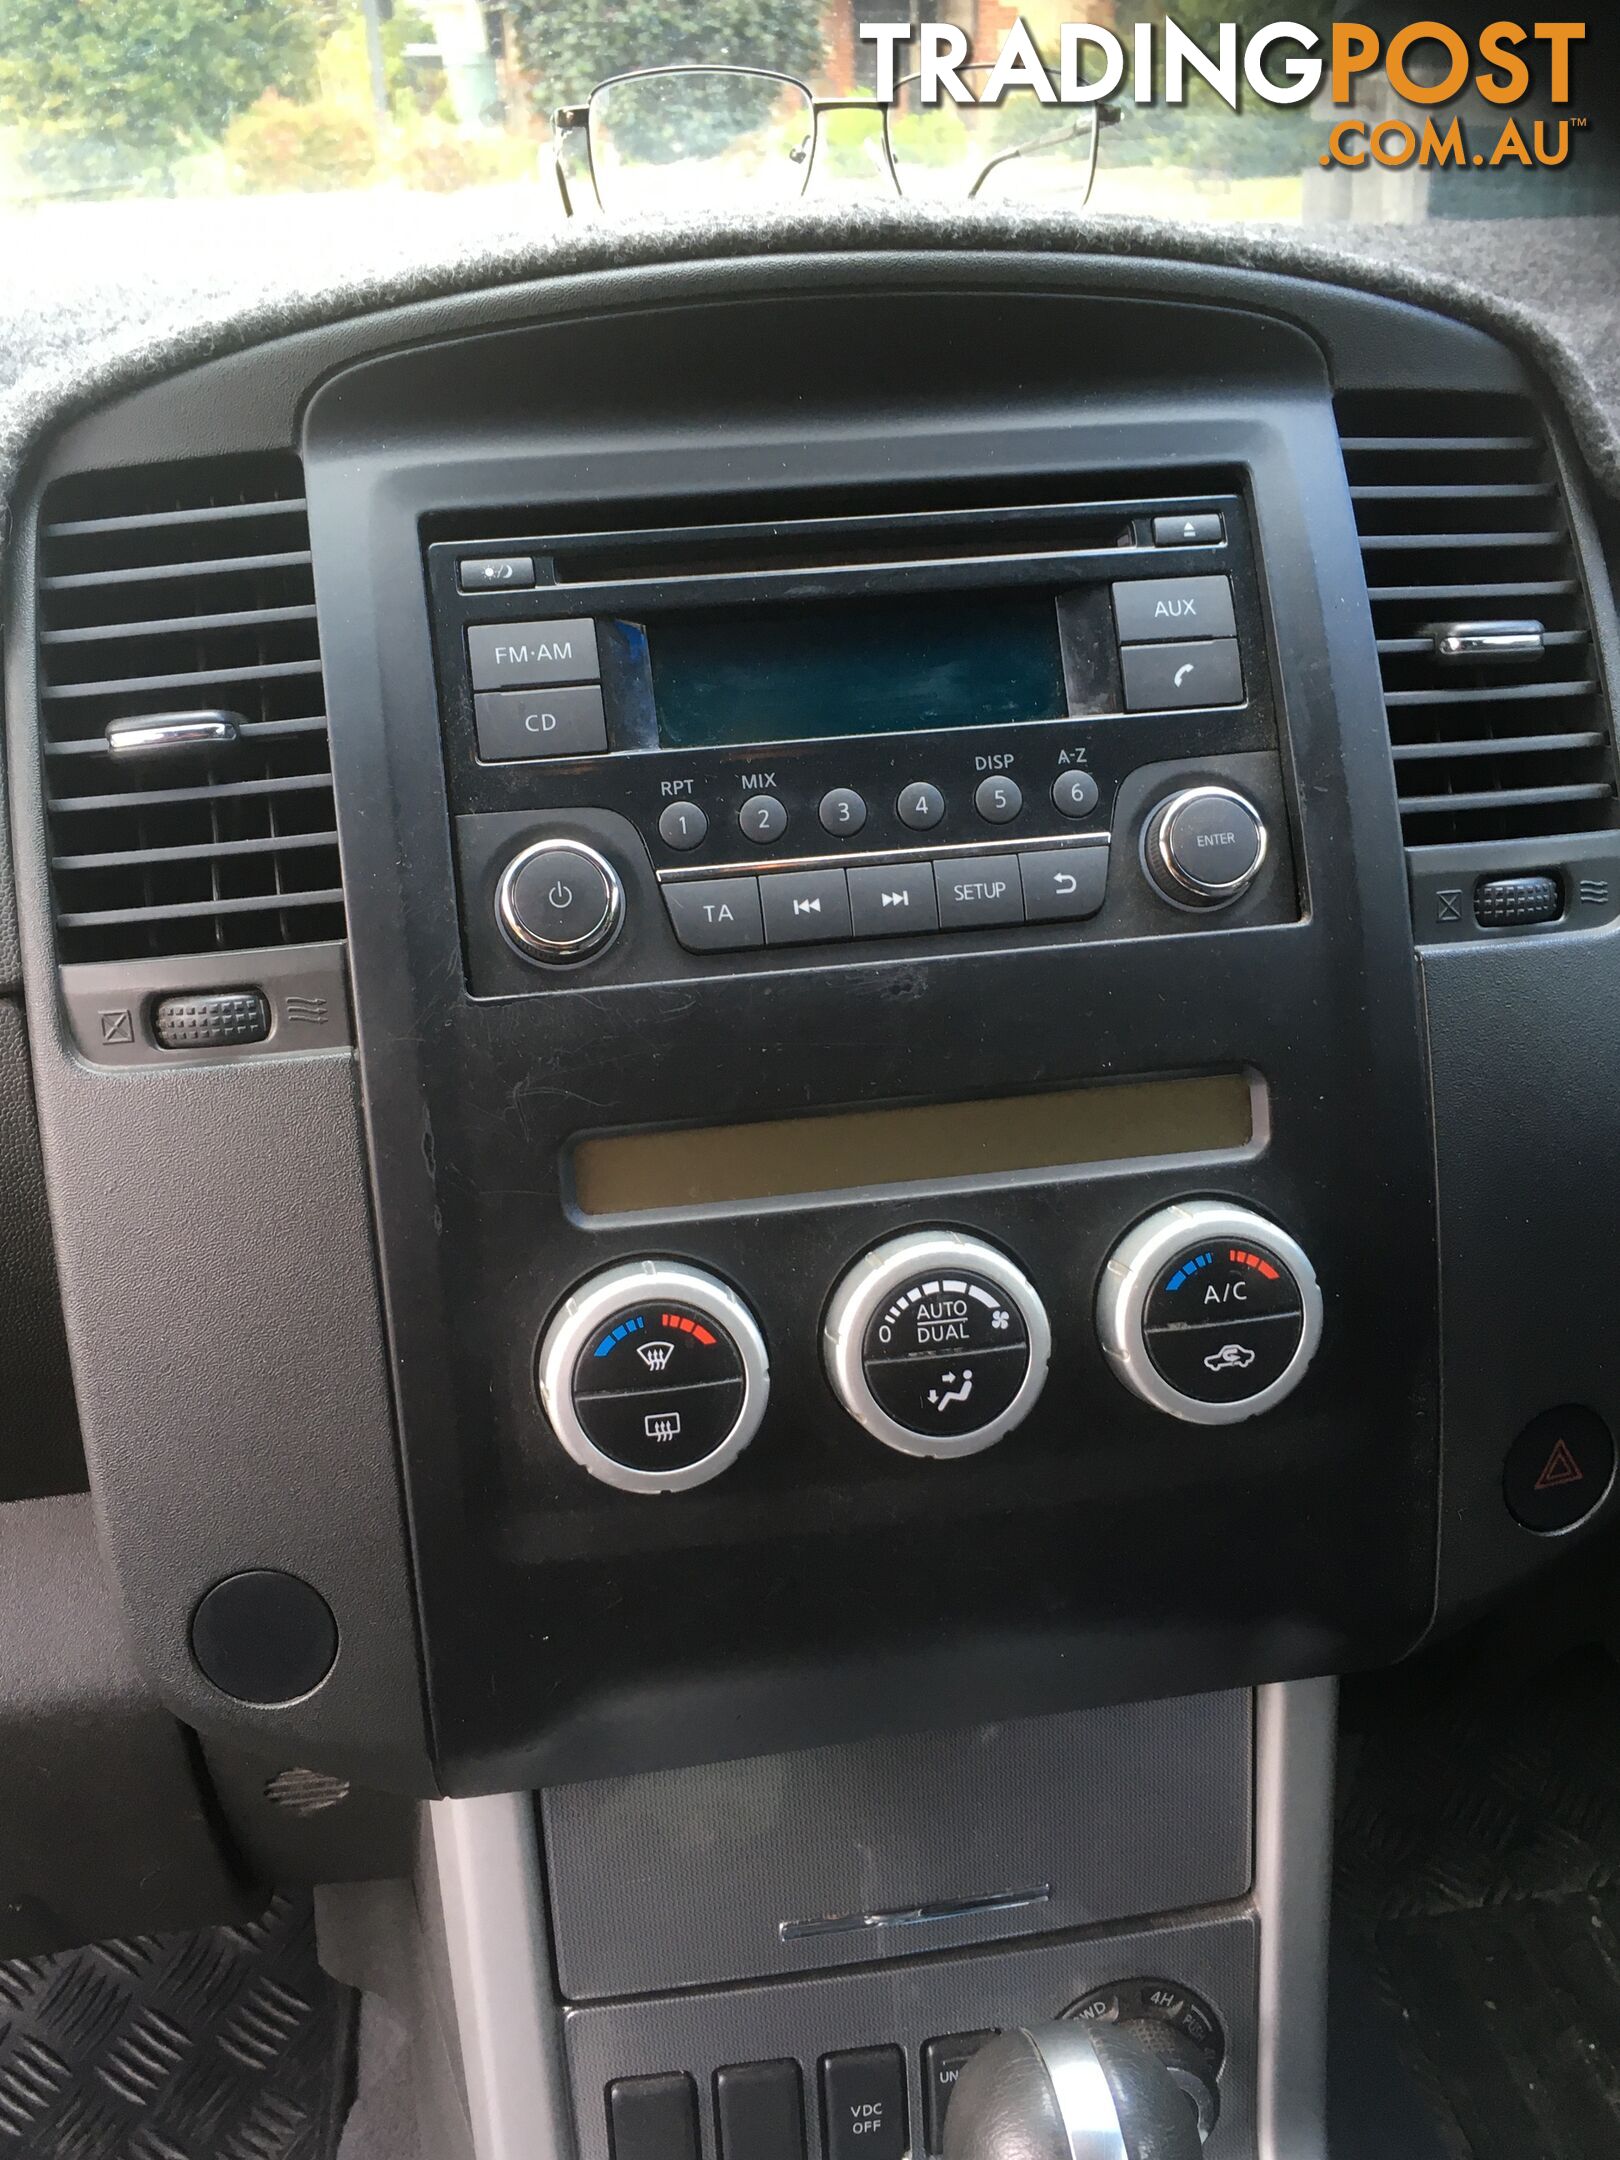 2012 Nissan Navara 550 DUAL CAB D40 S5 MY12 UTILITY 4X4 Ute Automatic